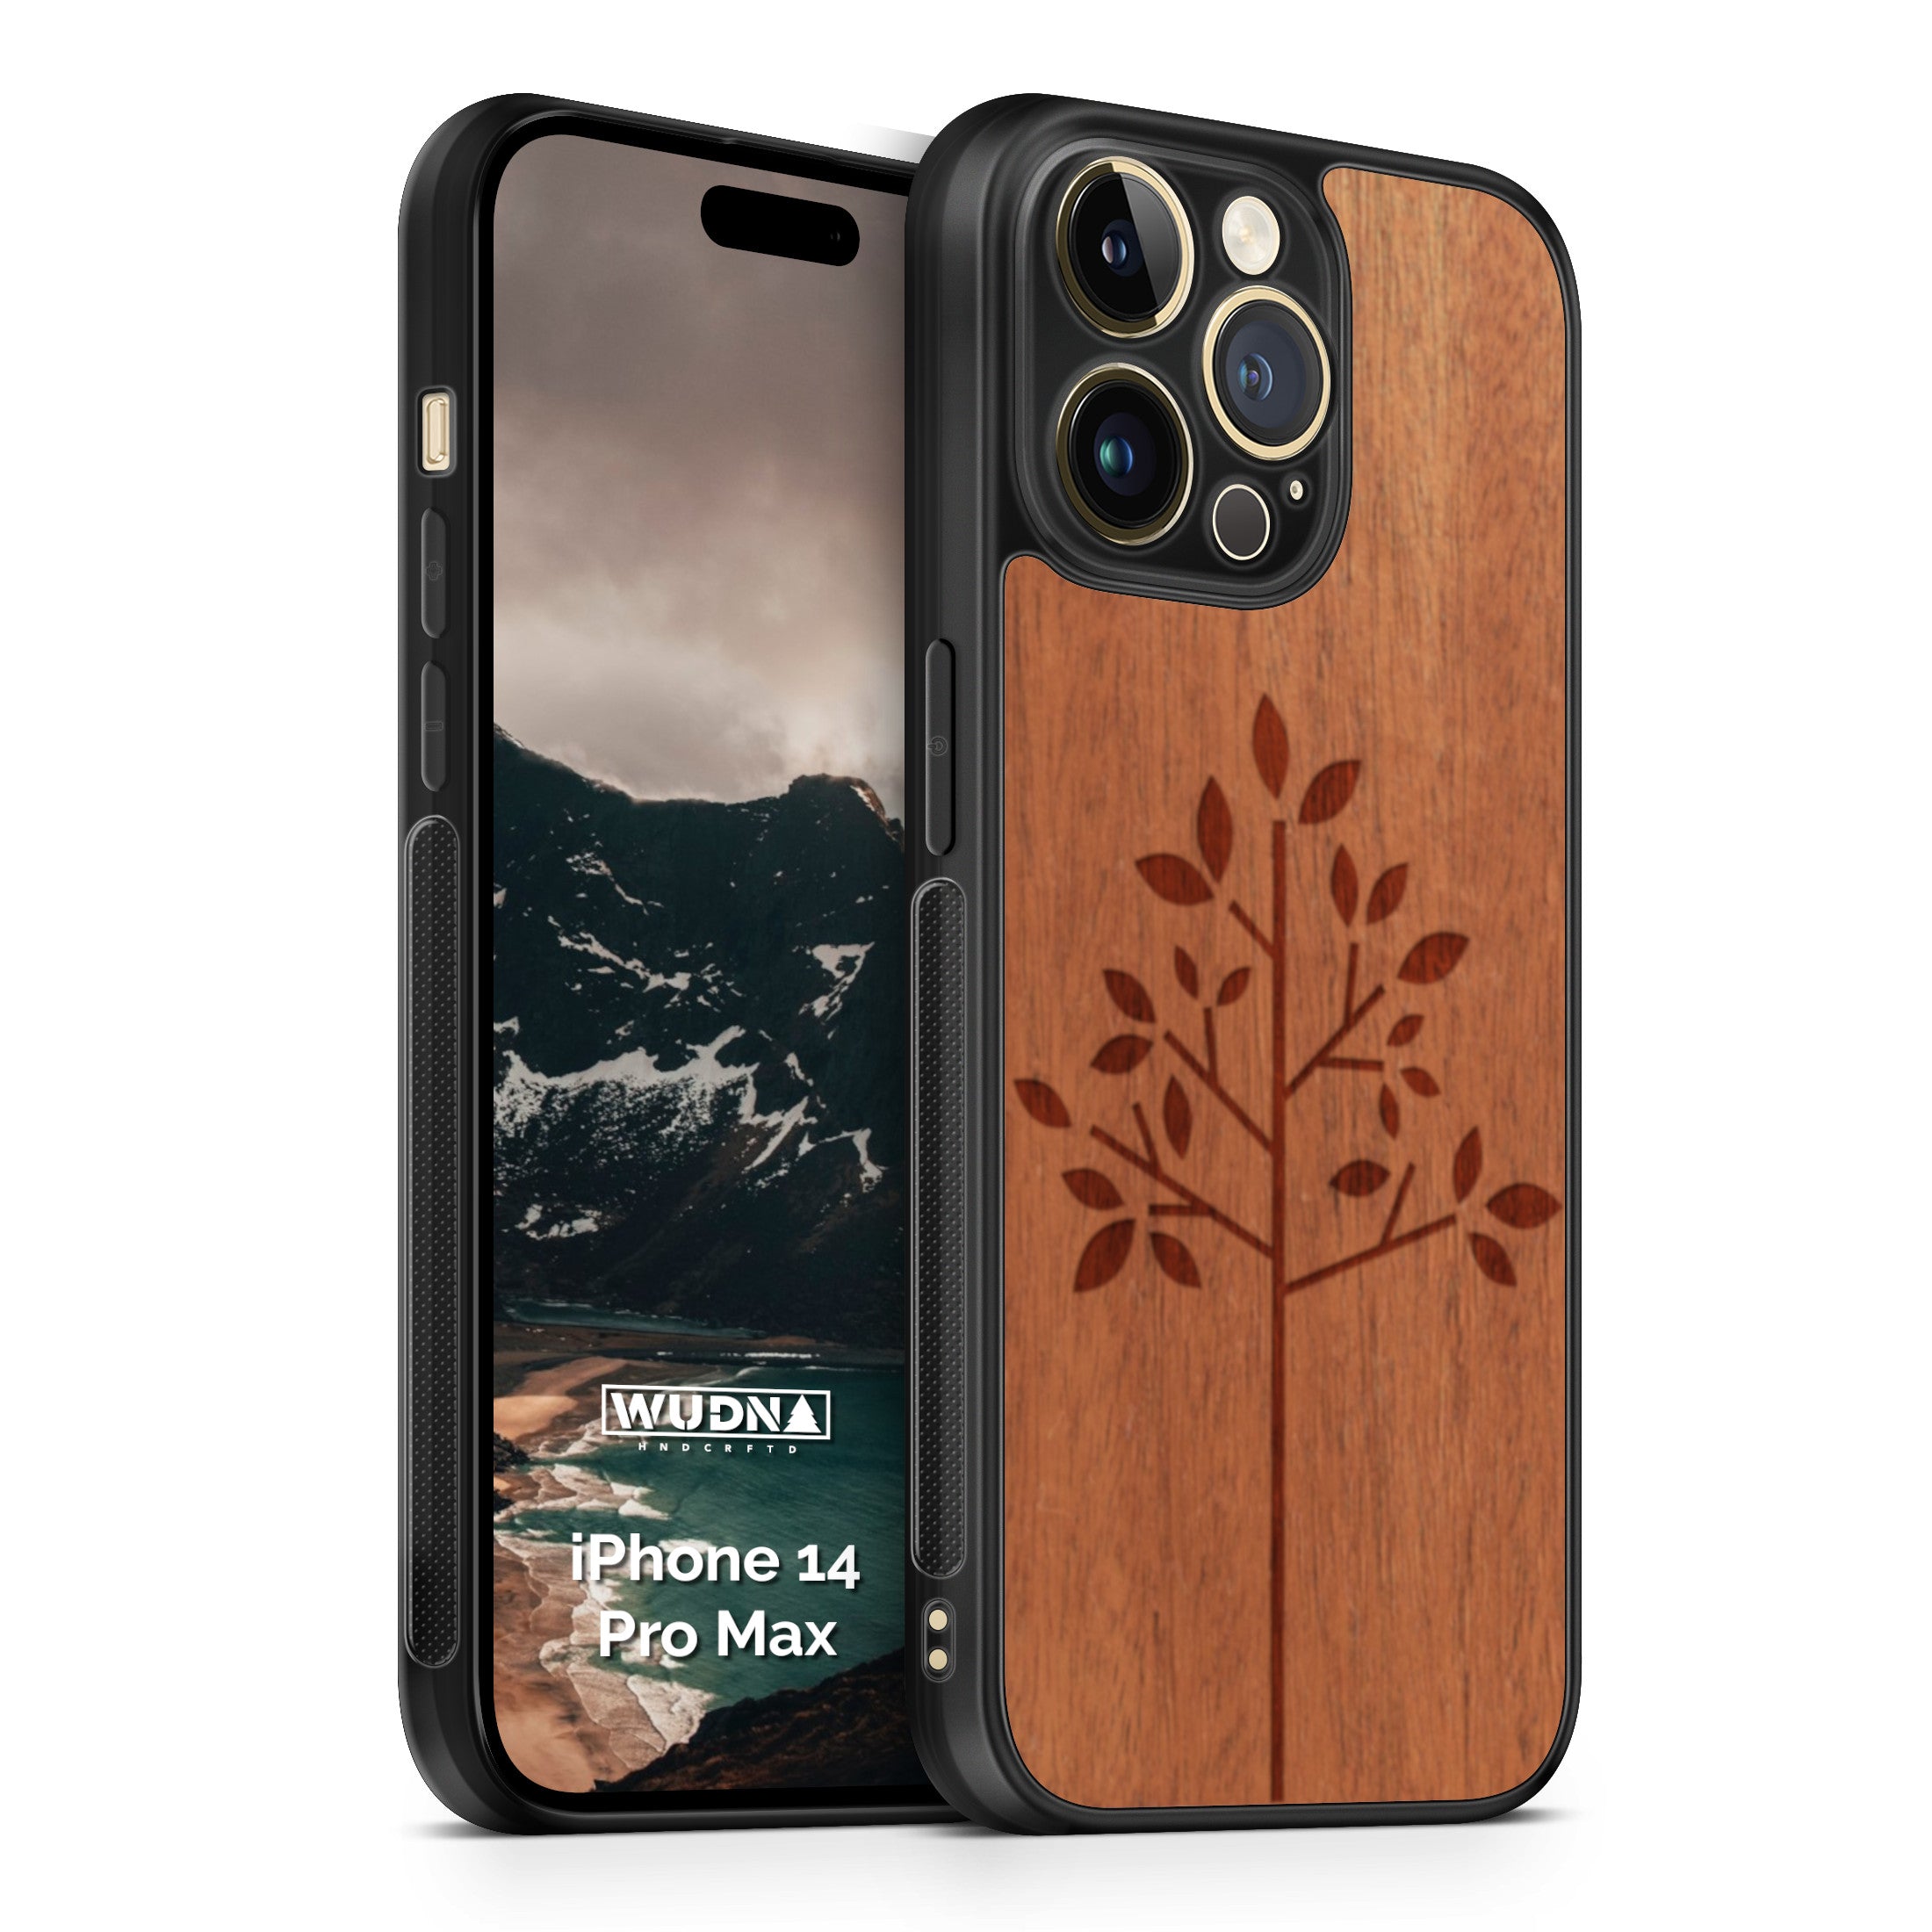 Slim Wooden Phone Case (Simple Tree in Mahogany)